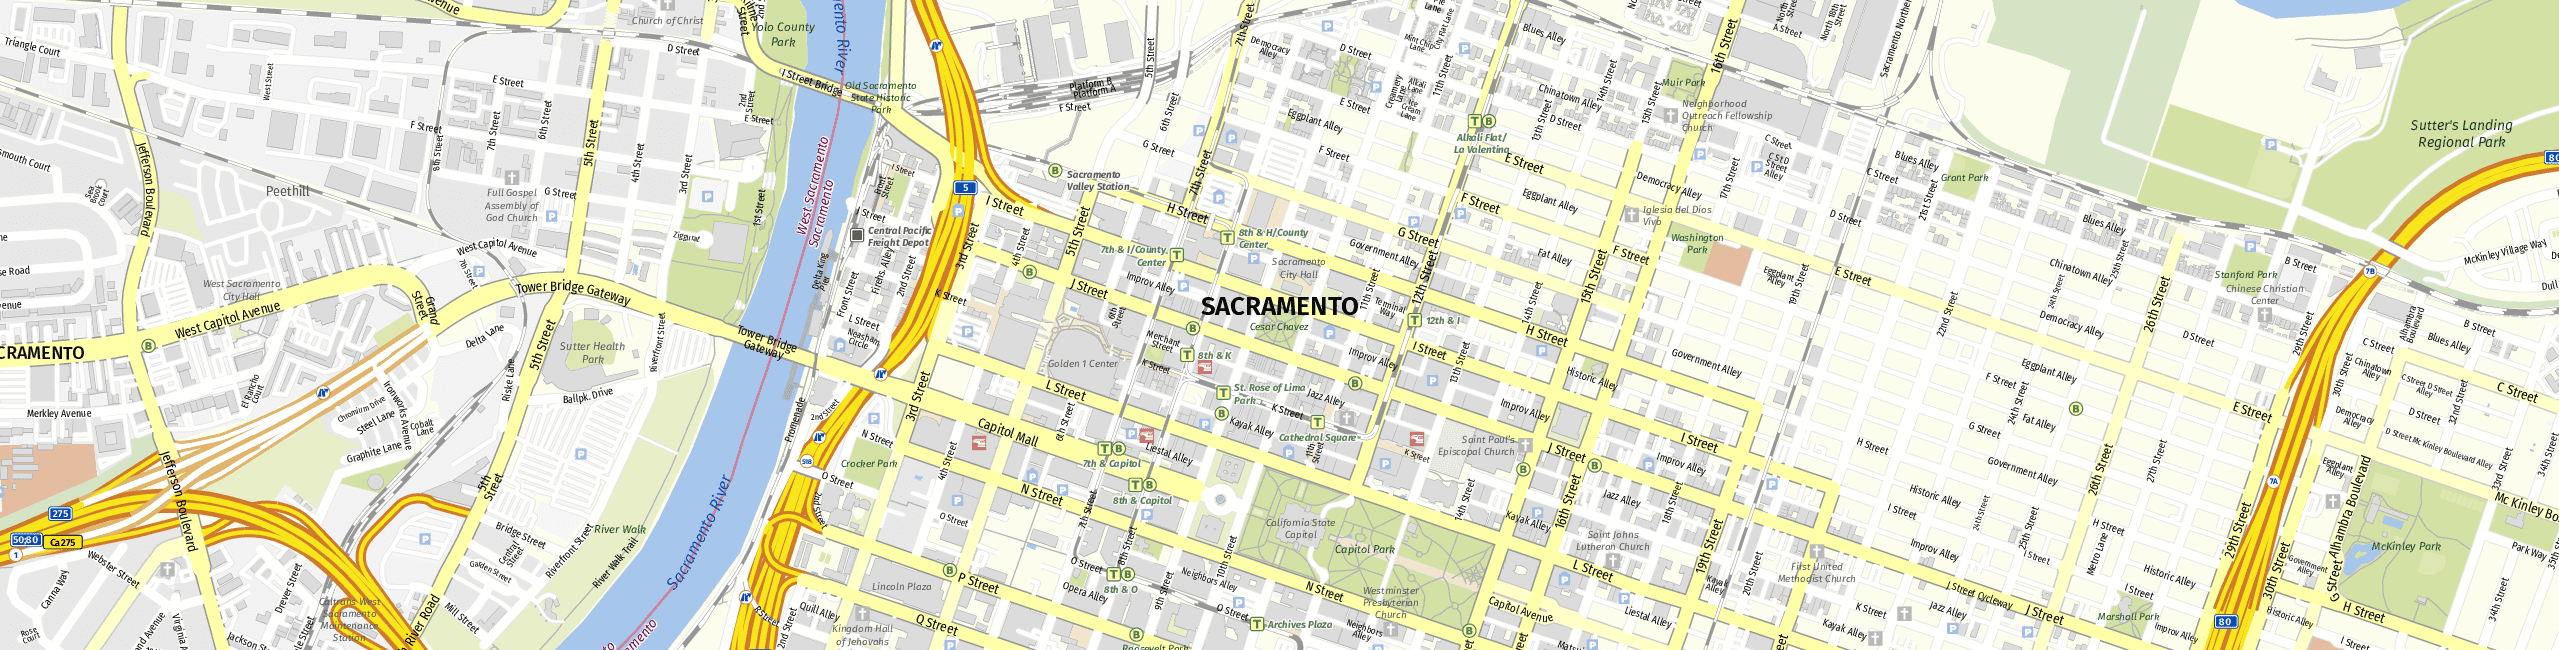 Stadtplan Sacramento zum Downloaden.